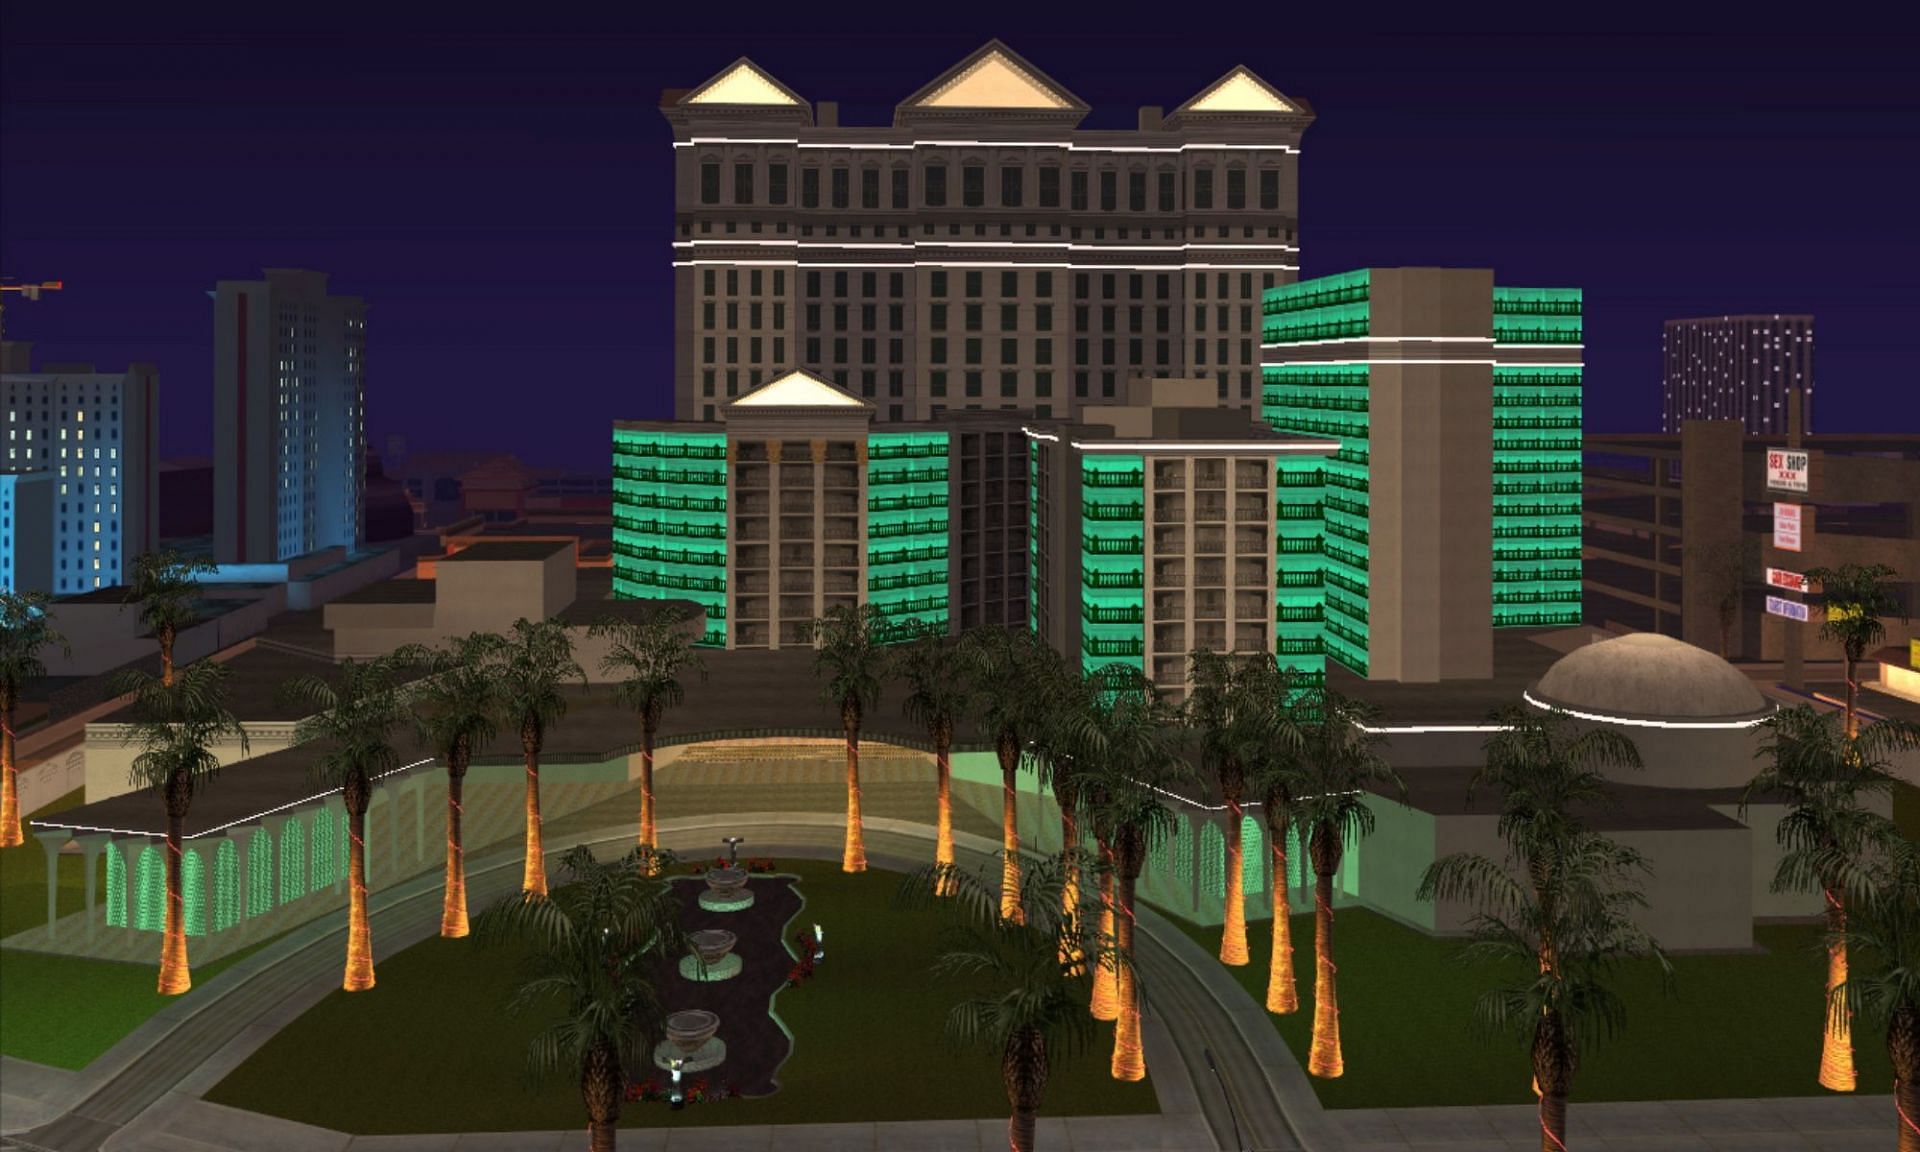 The casinos light up the night sky